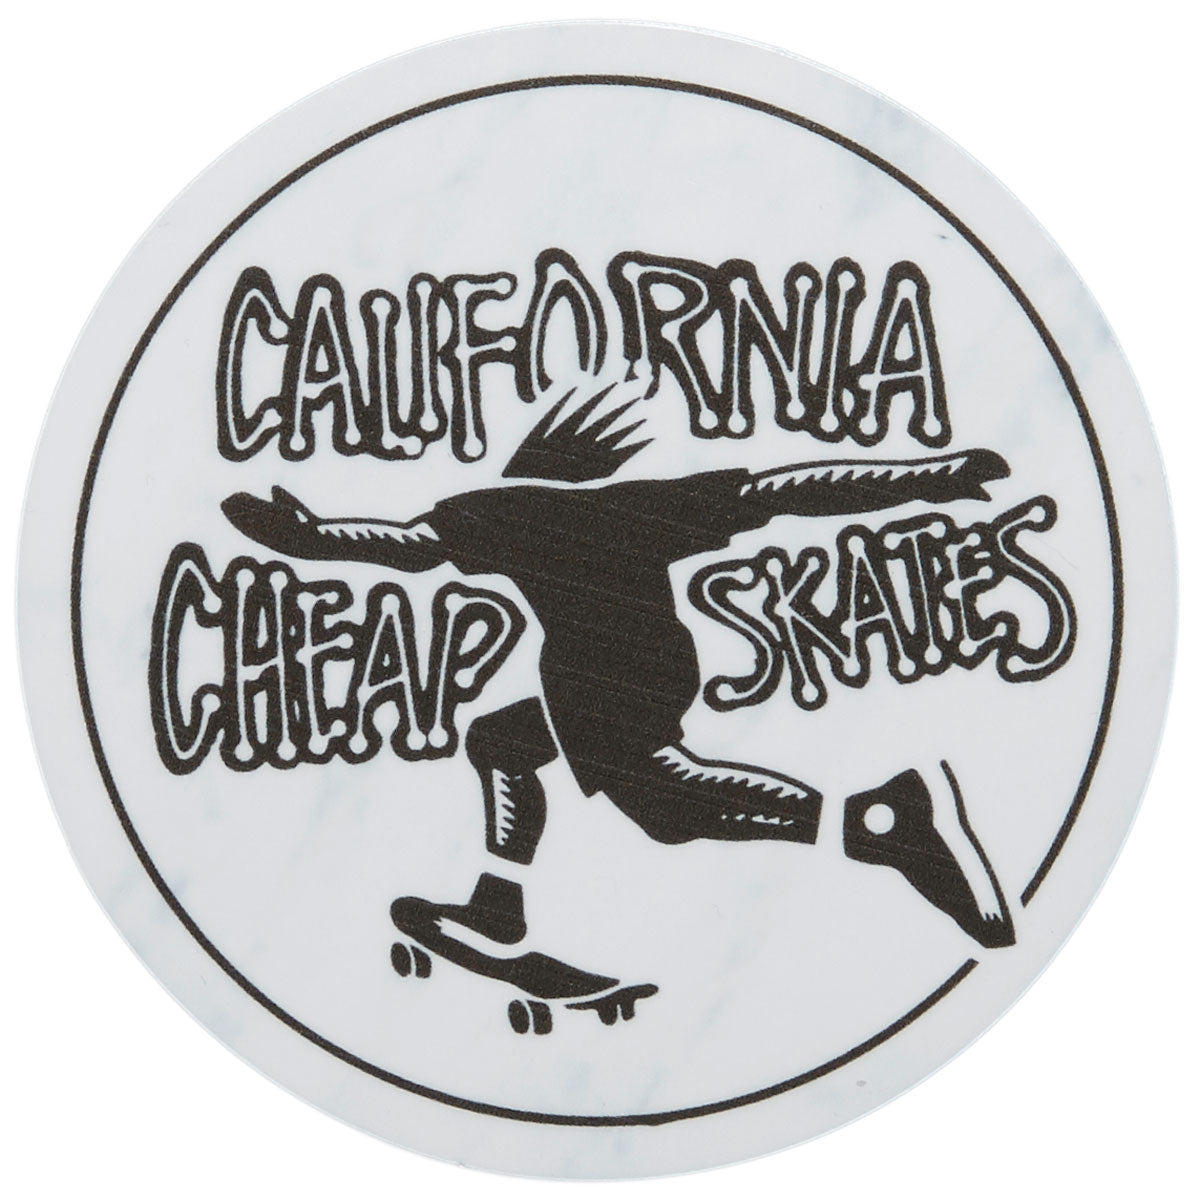 CCS Cheap Skates Sticker - White Marble/Black image 1